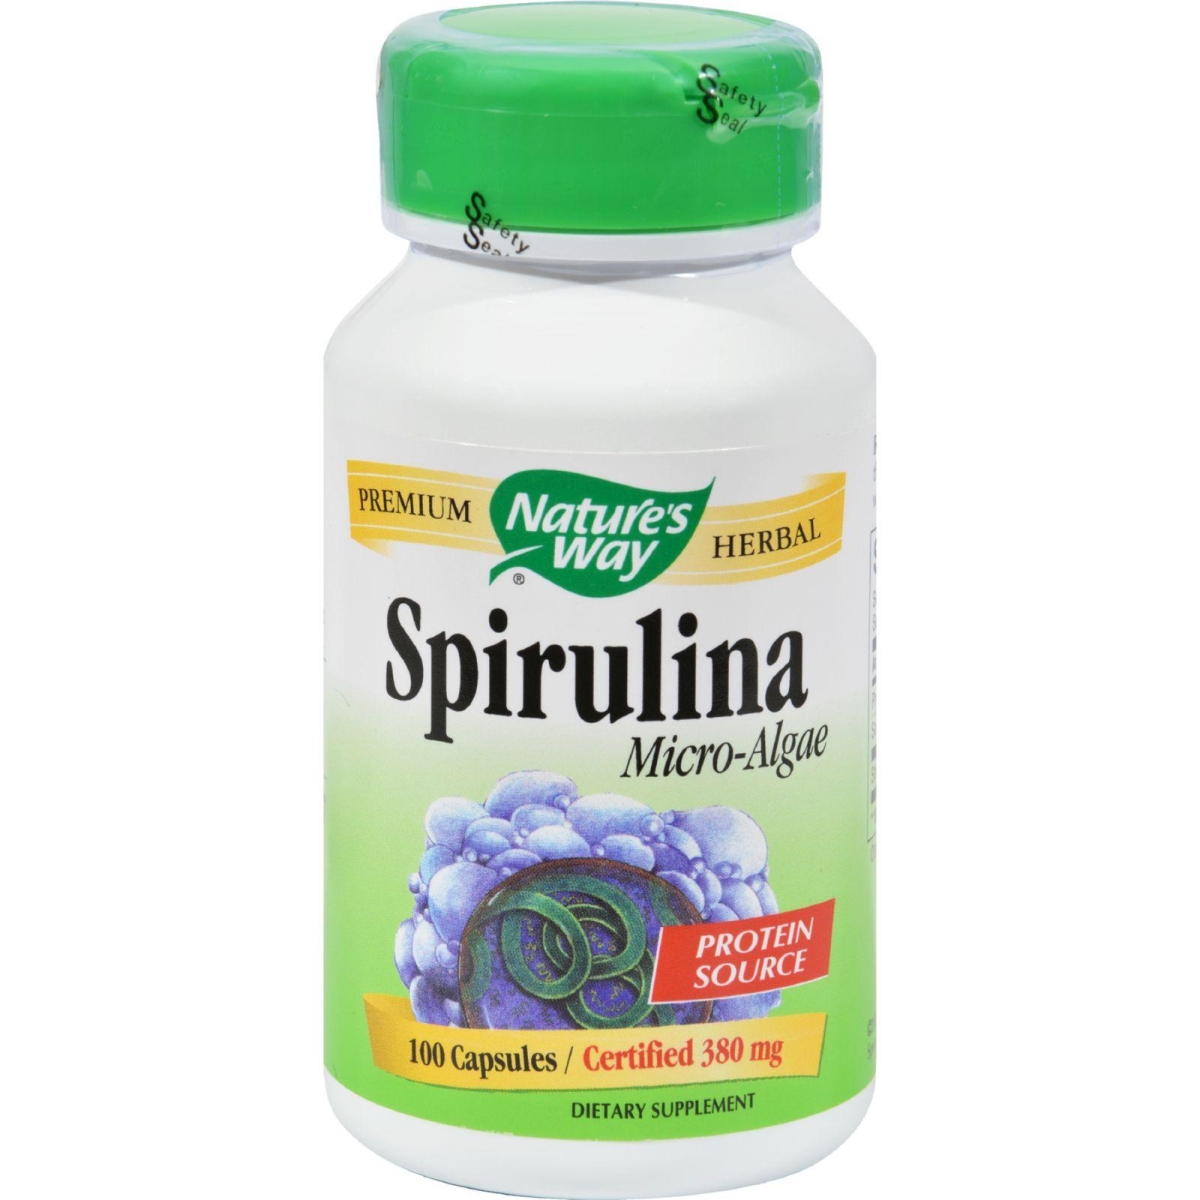 Hg0153288 Spirulina Micro-algae, 100 Capsules